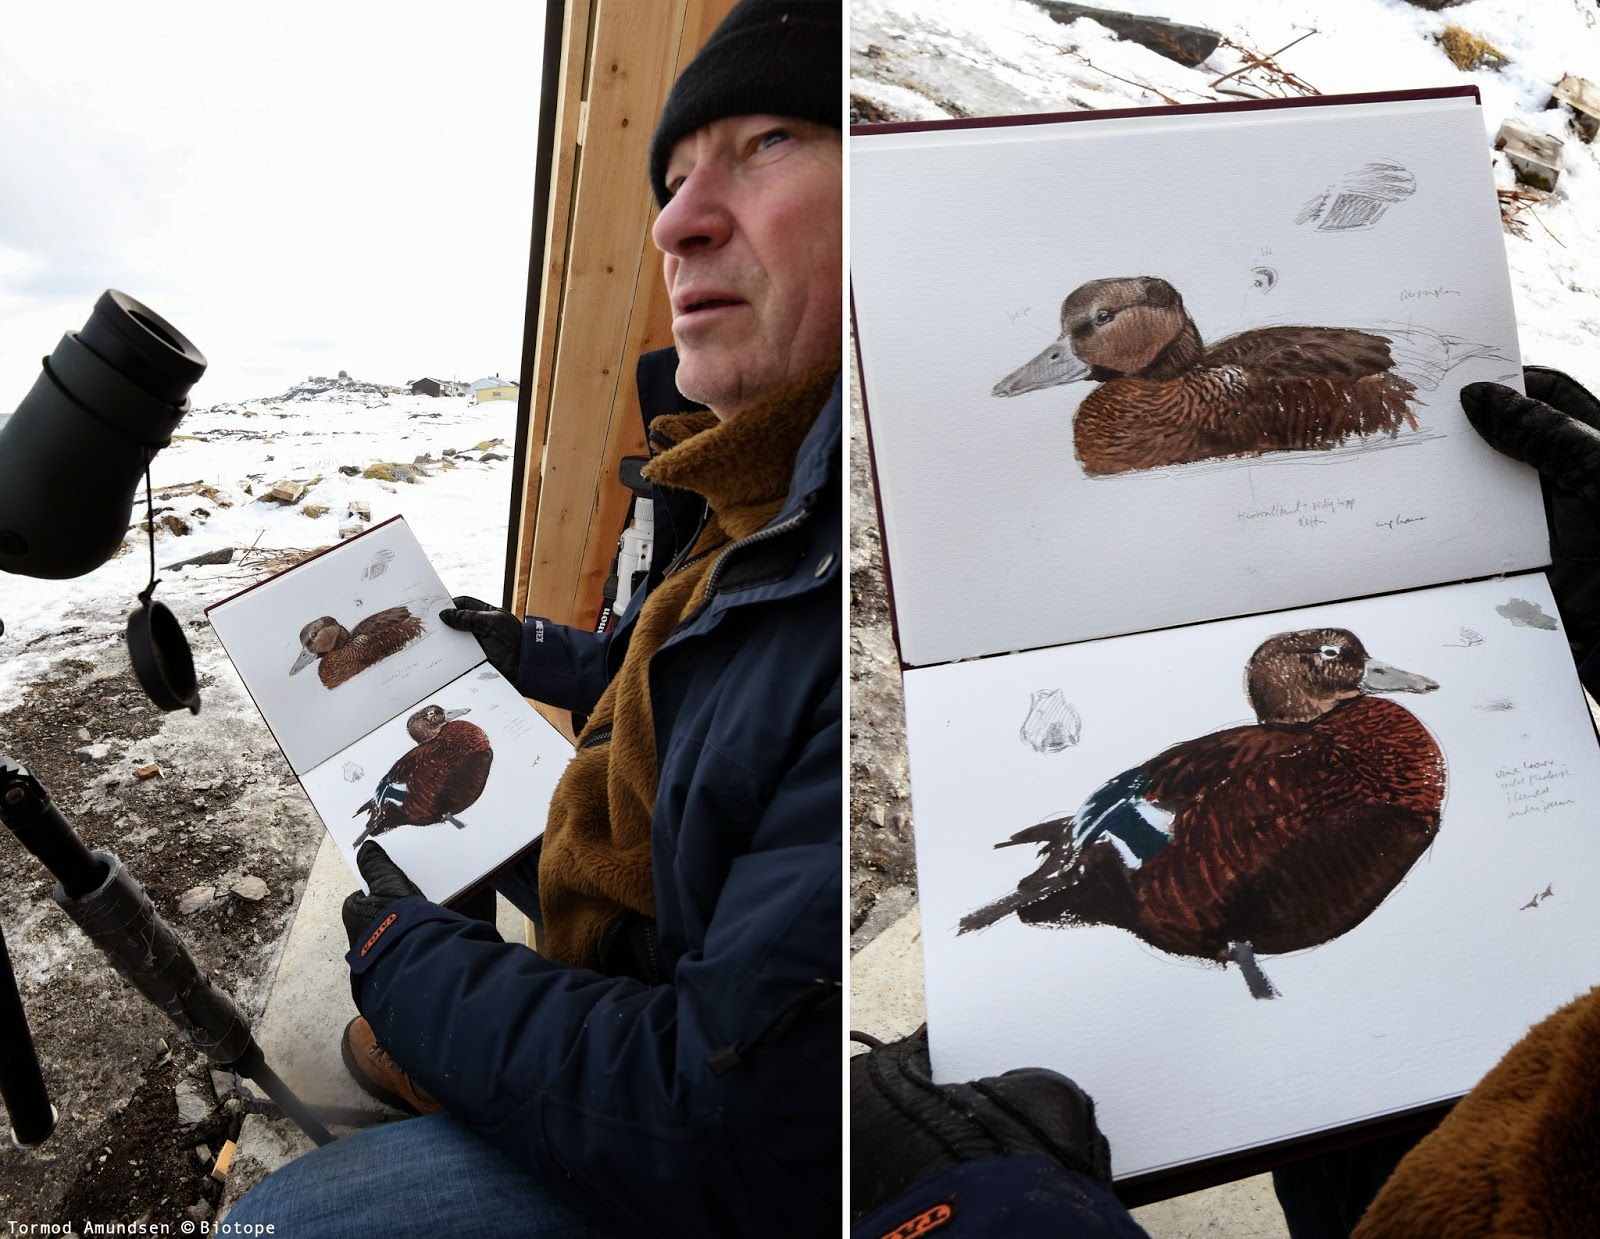 Gullfest 2015 Lars Jonsson at Hasselnes birdhide sketching ps-edit Amundsen © Biotope.jpg